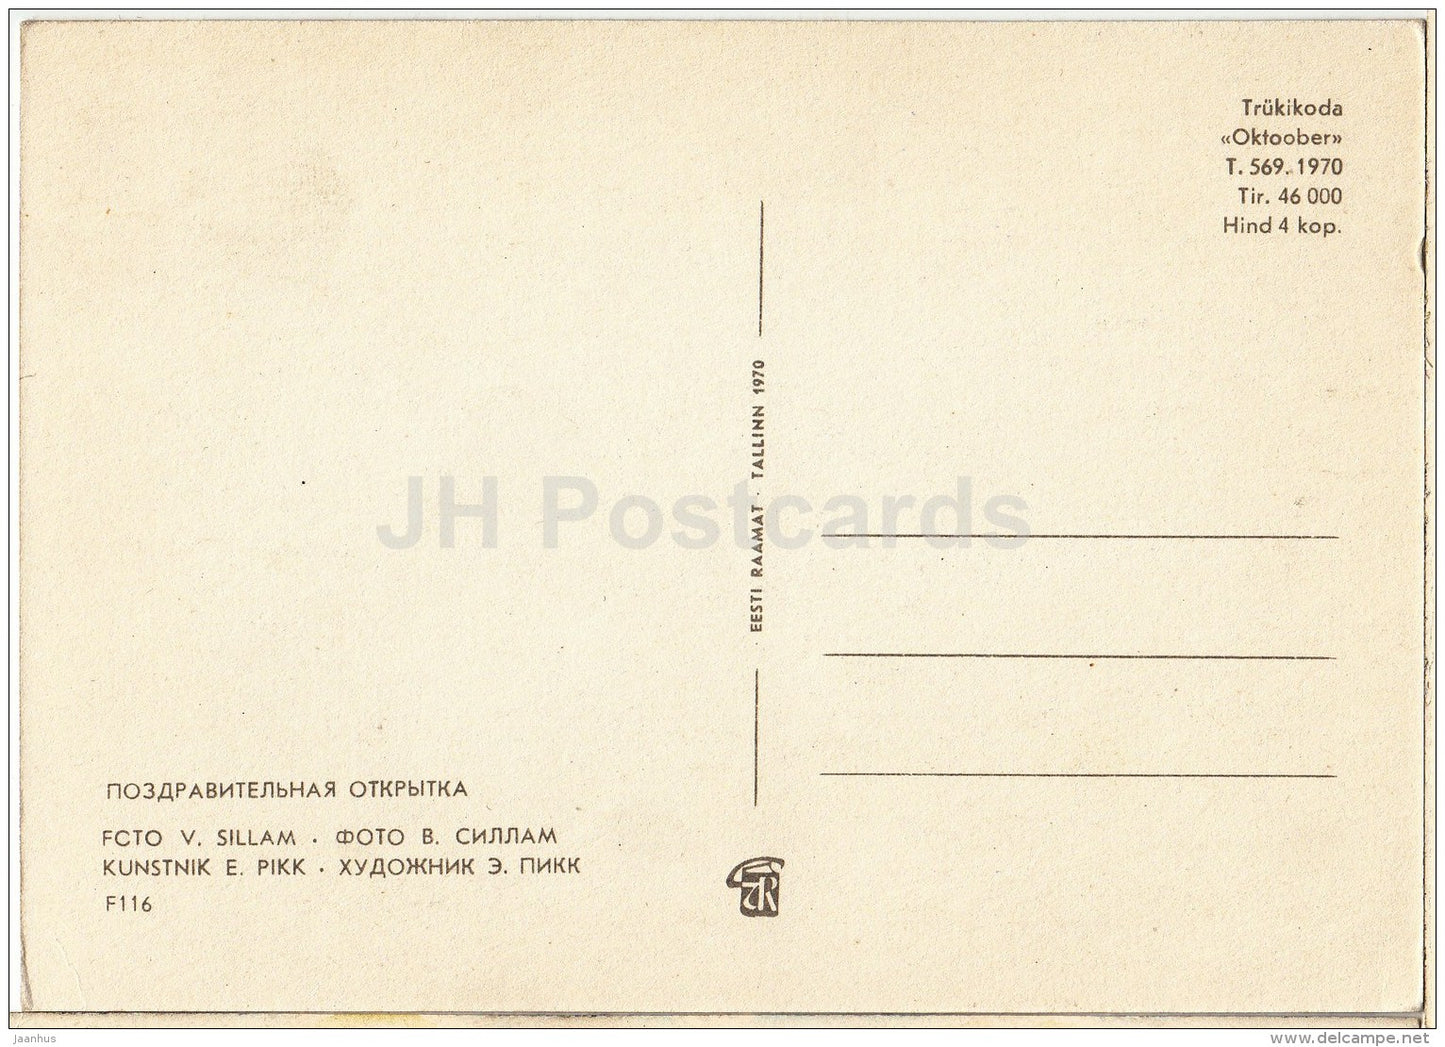 New Year Greeting card - candle - fir cones - pretzel - 1970 - Estonia USSR - unused - JH Postcards